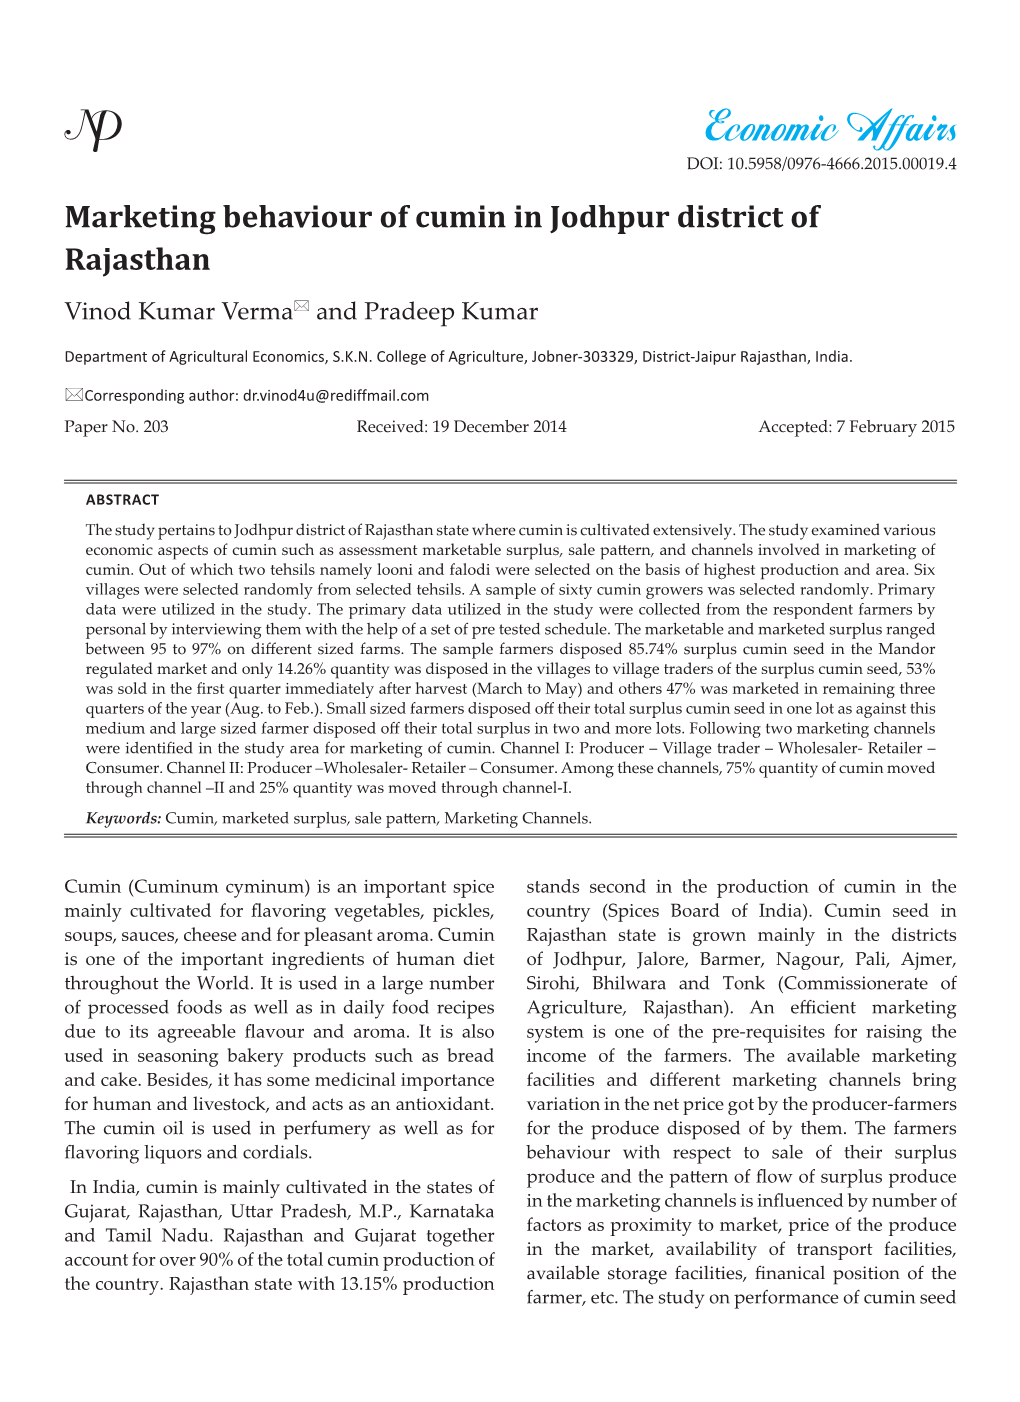 Marketing Behaviour of Cumin in Jodhpur District of Rajasthan Vinod Kumar Verma* and Pradeep Kumar